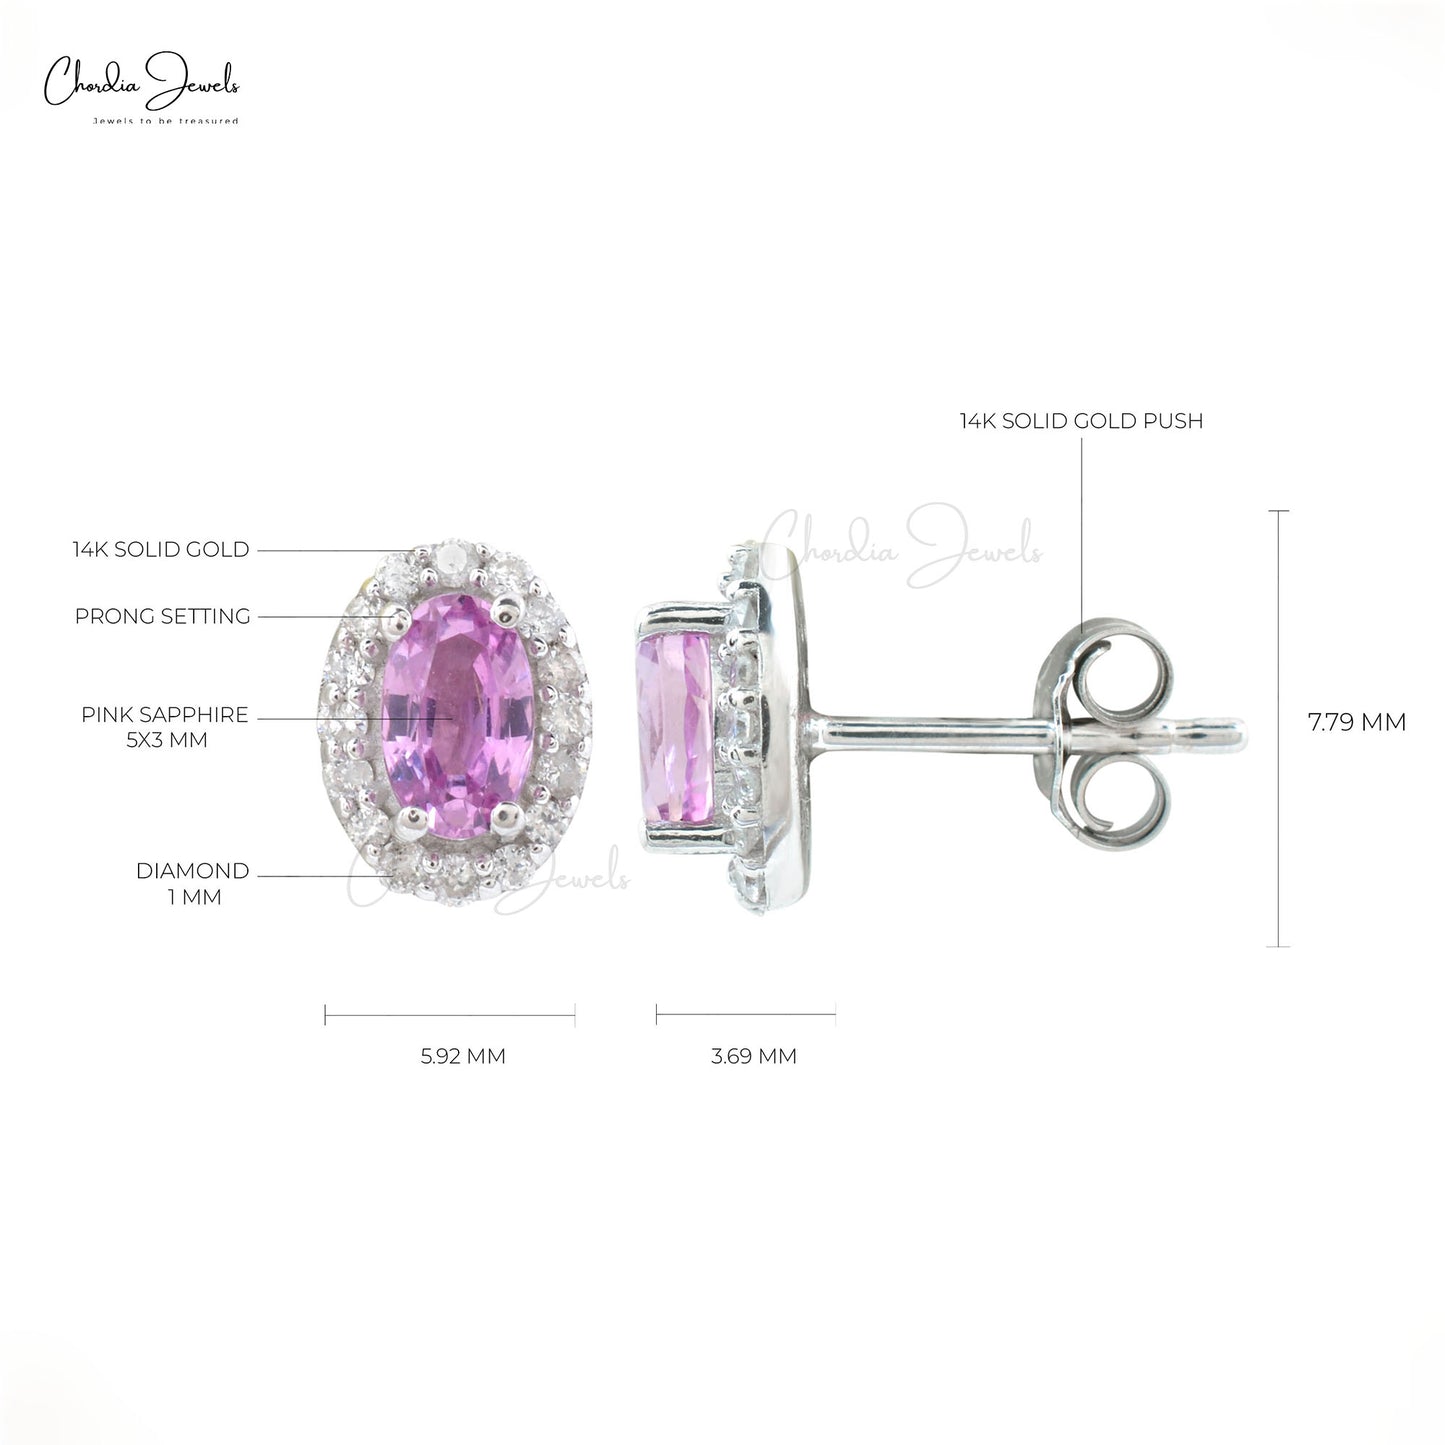 Natural Pink Sapphire Dainty Earrings 14k Solid White Gold Diamond Push Back Earrings 5x3mm Oval Cut Gemstone Halo Earrings For Women's